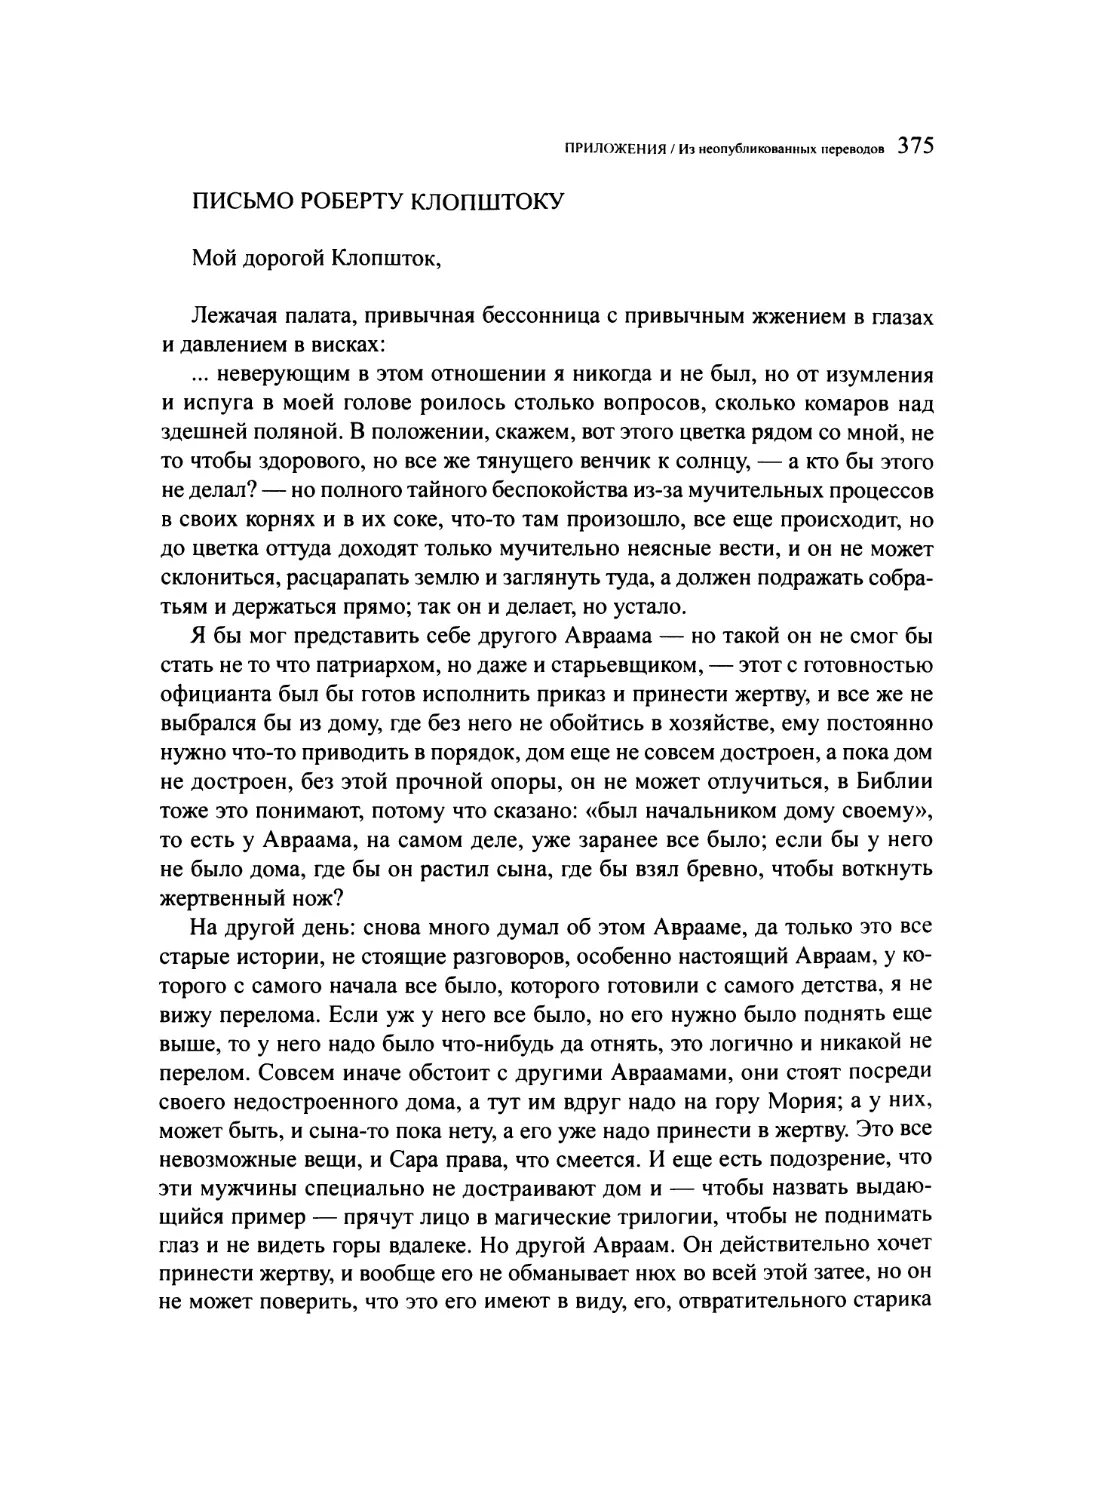 Письмо Р. Клопштоку